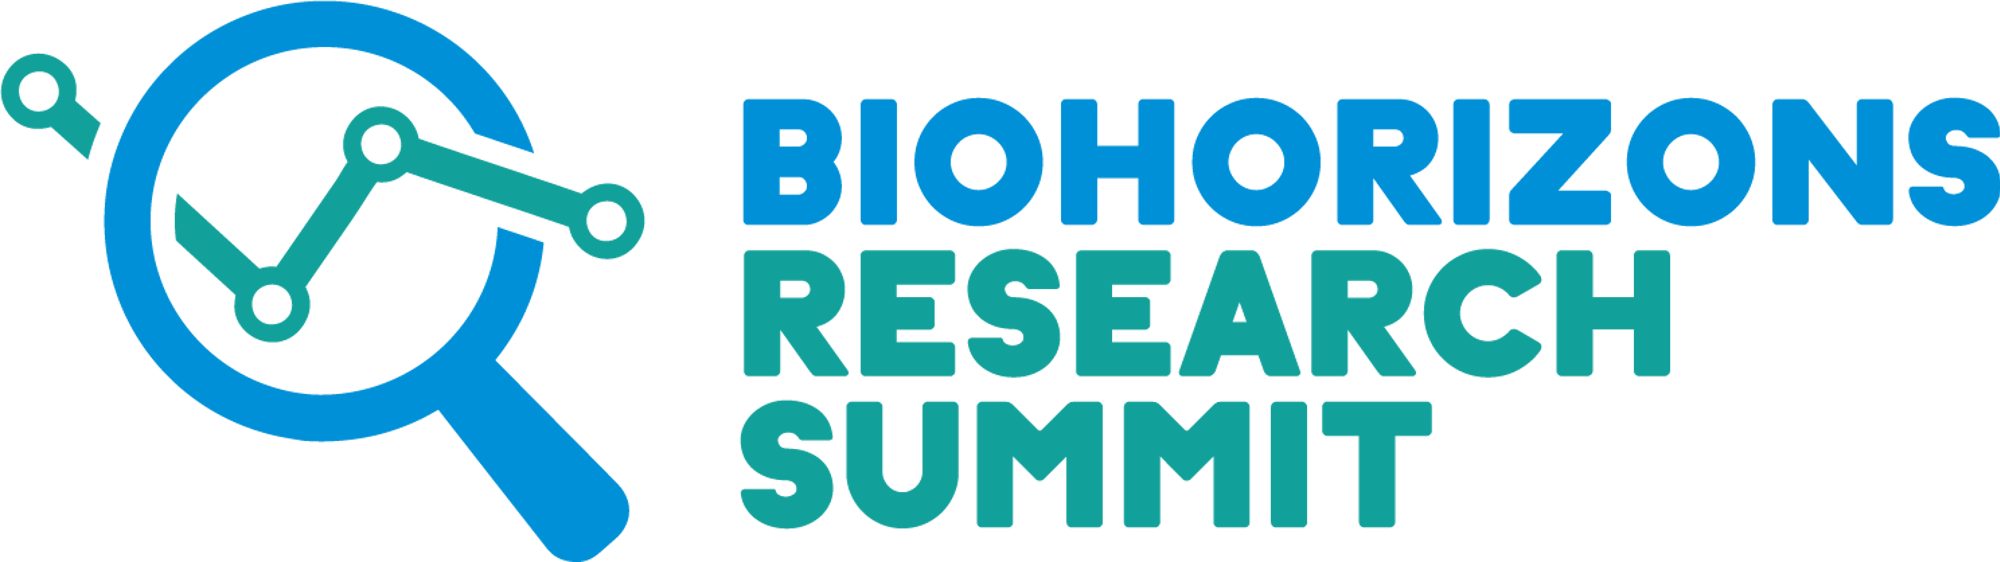 Biohorizons Research Summit Logo V1final (1)